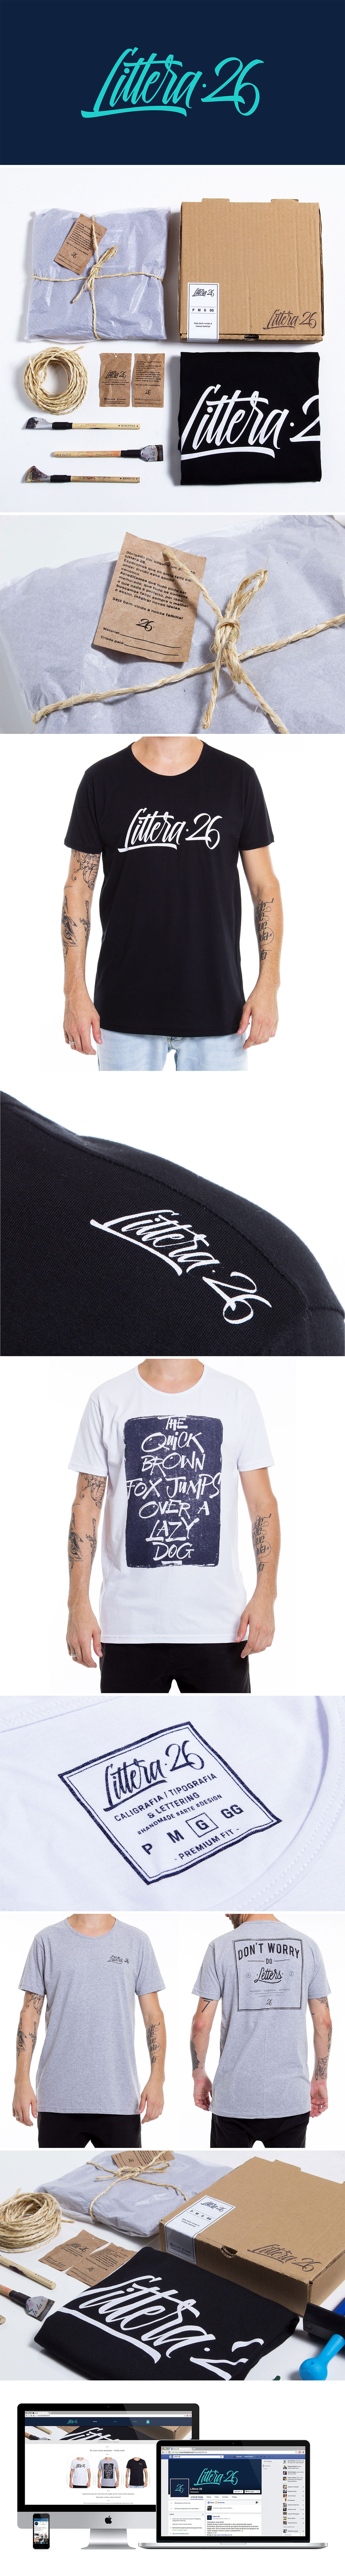 littera26 handmade arte art design caligrafia lettering tipografia marca embalagem Clothing camiseta tee tshirt logo